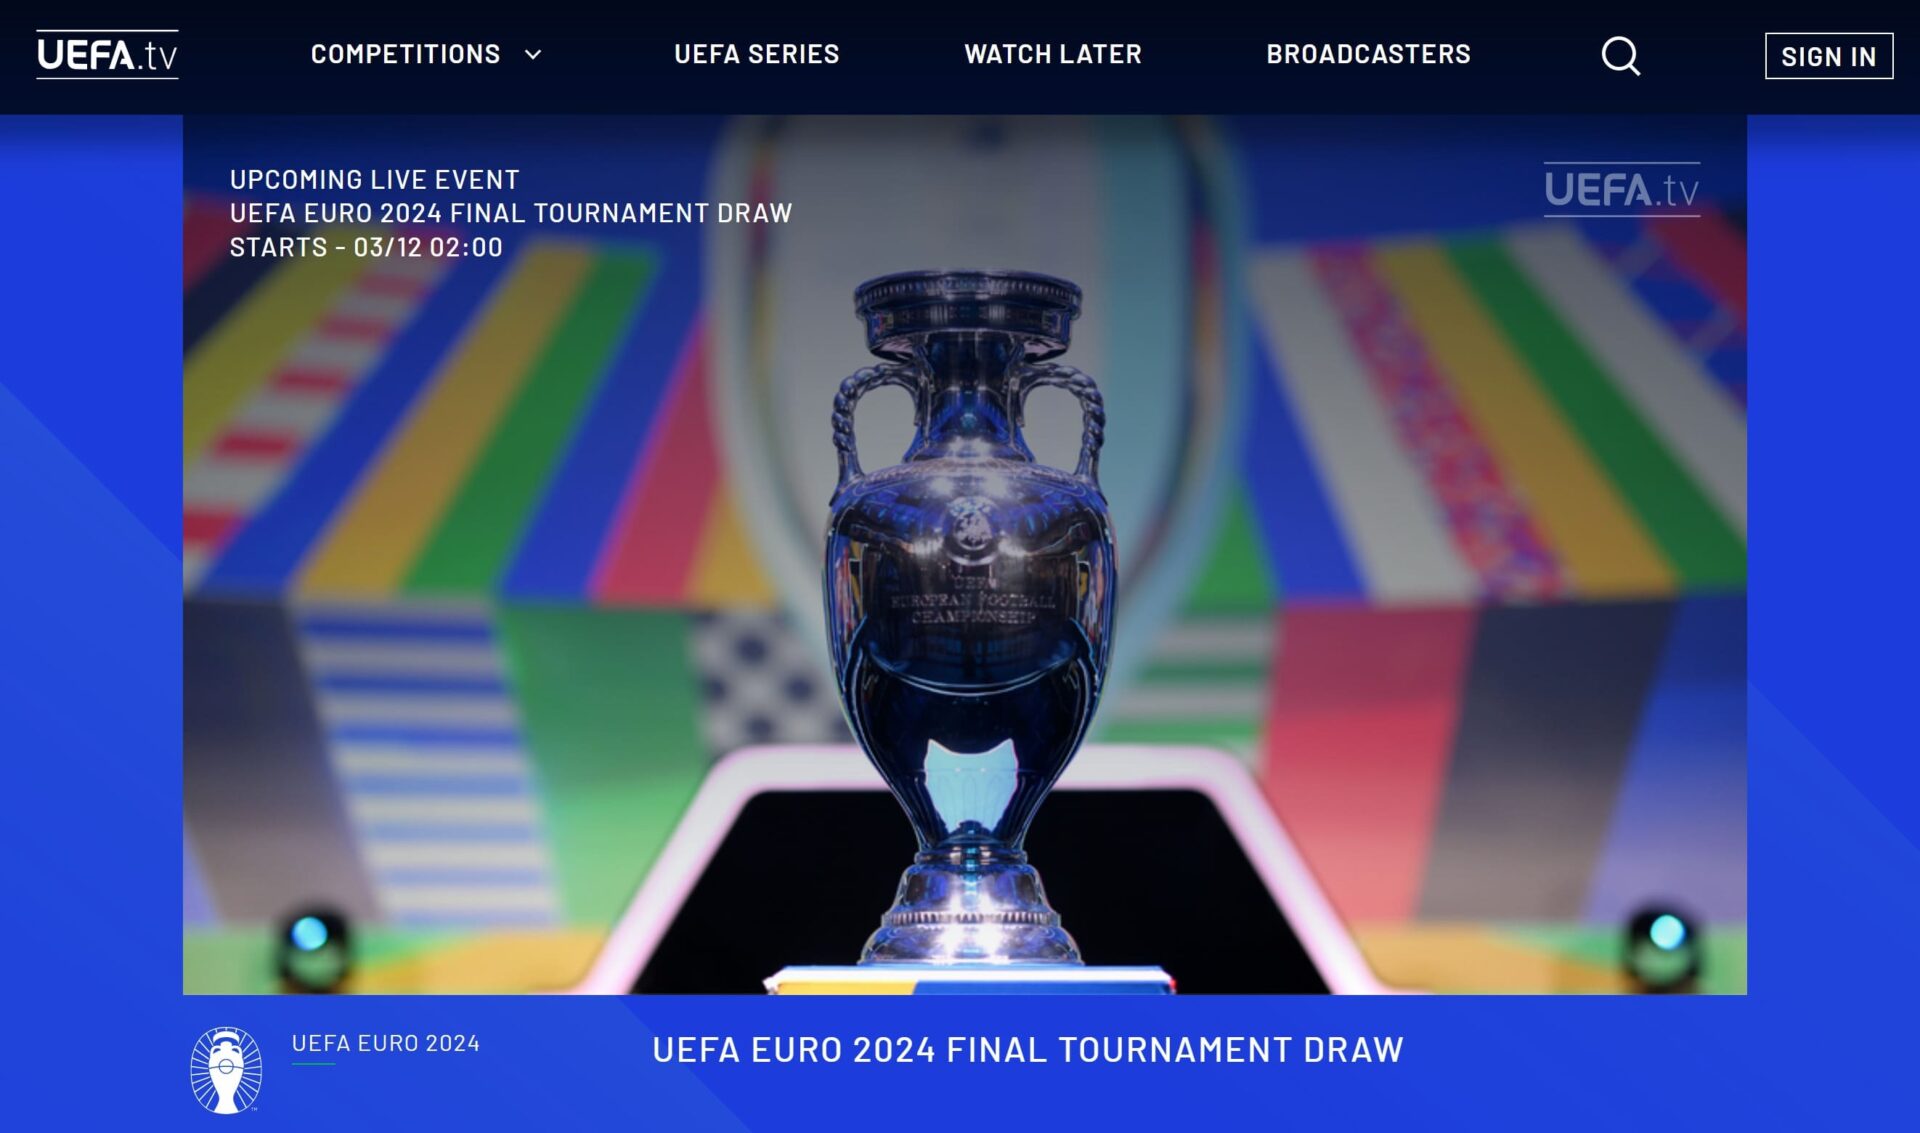 UEFA EURO 2024 Final Tournament Draw - UEFA.tv - www.uefa.tv